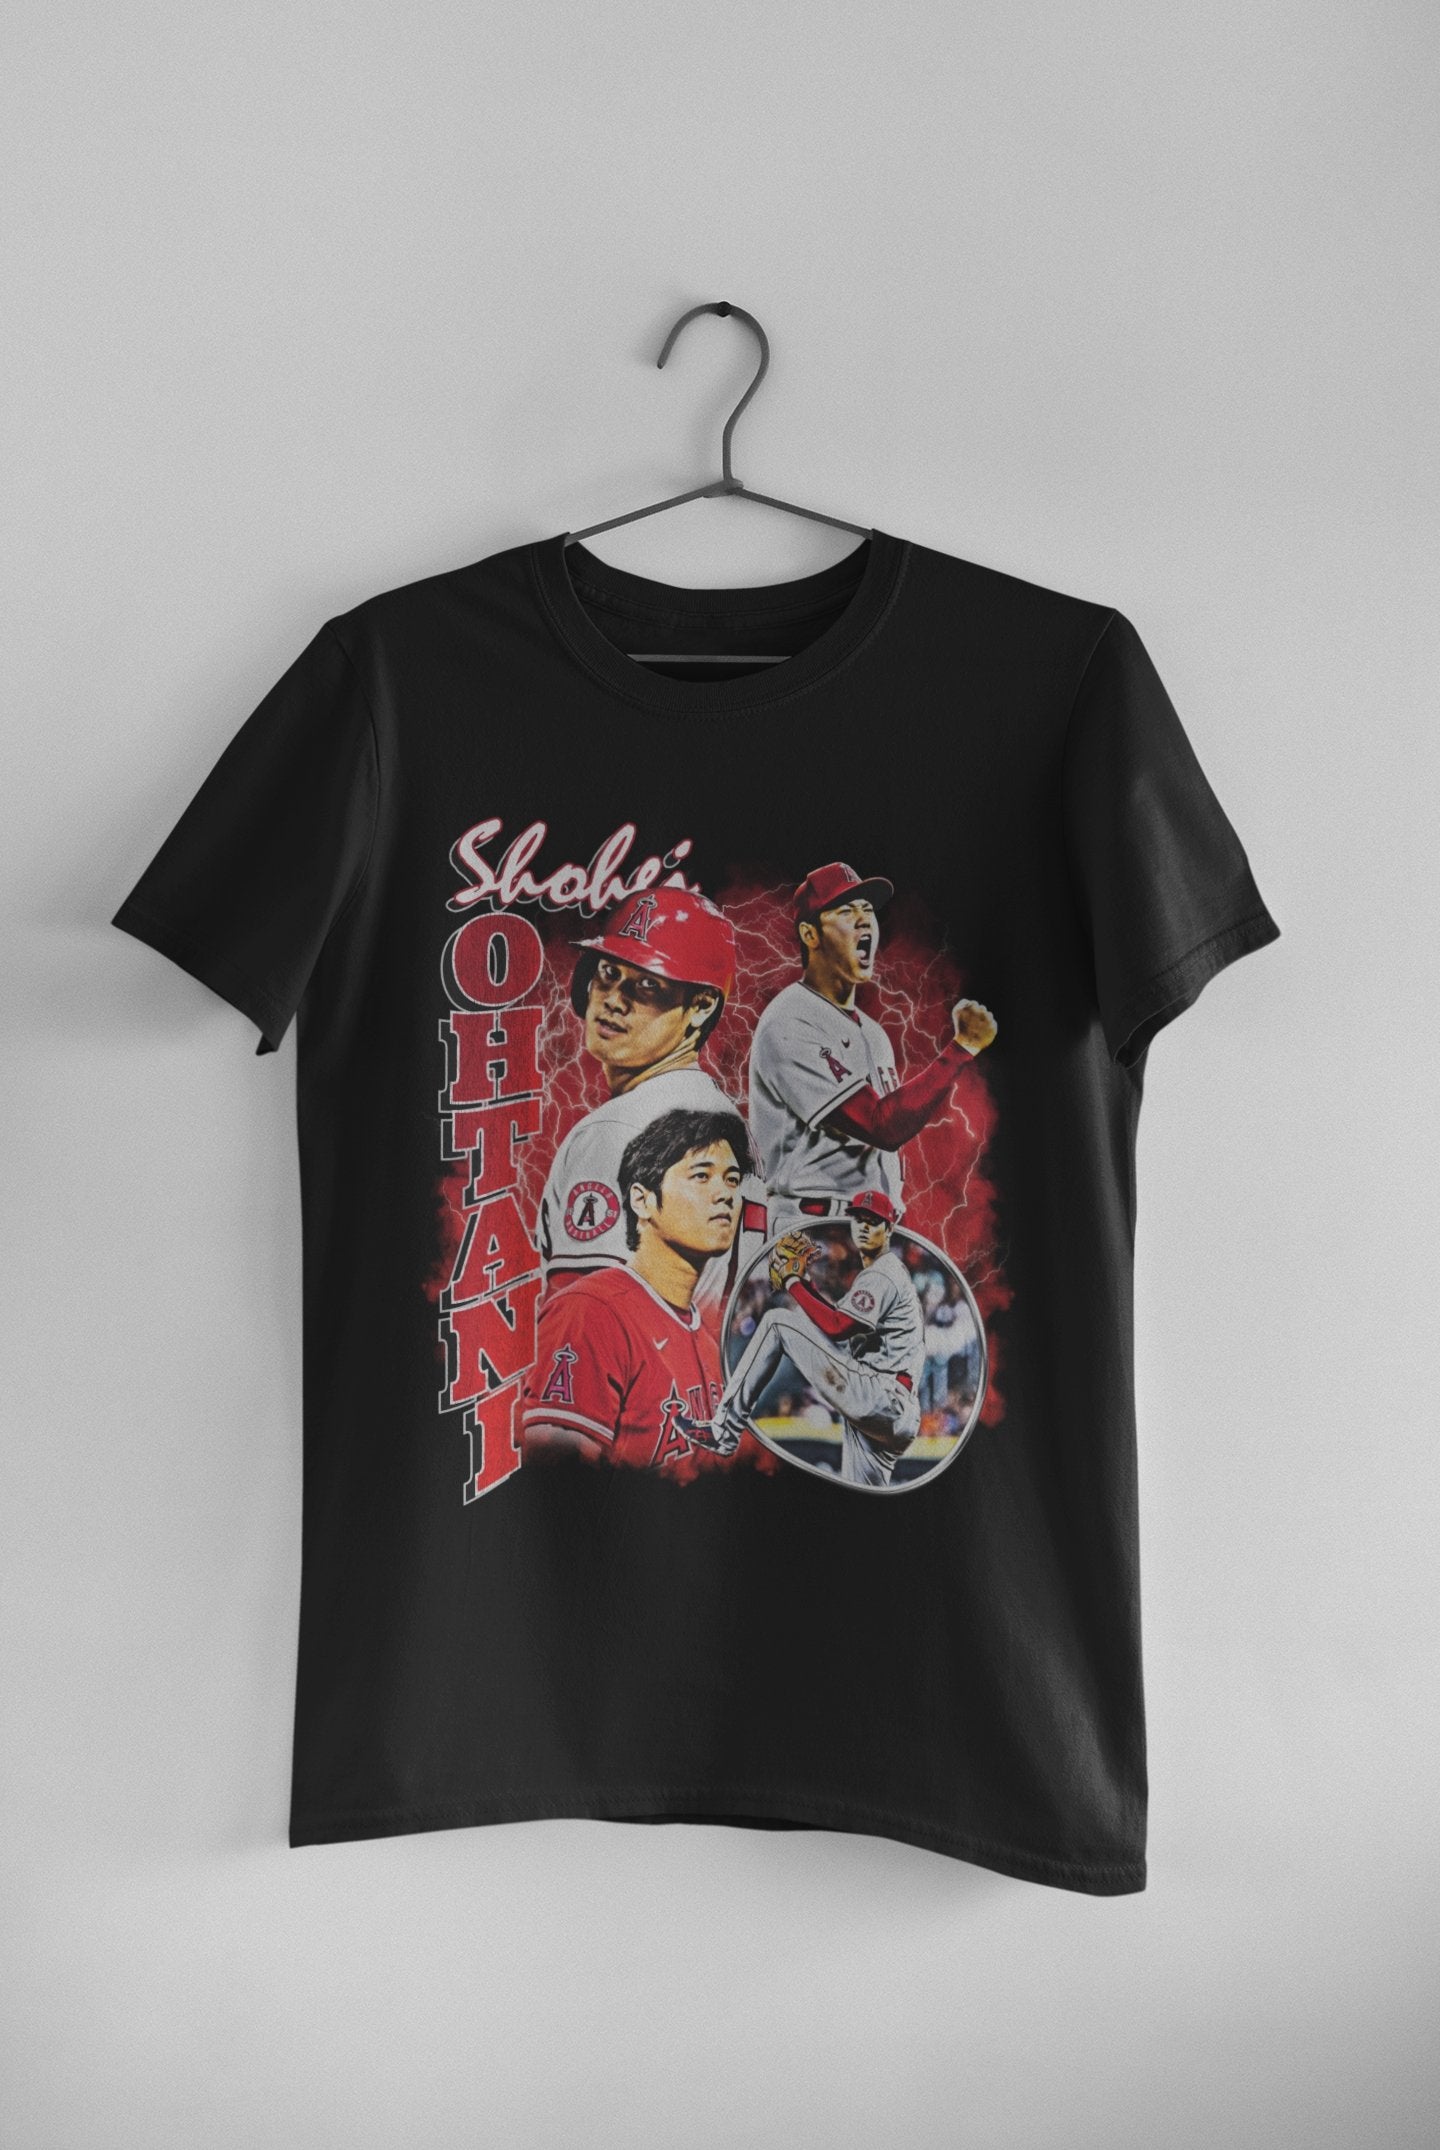 Shohei Ohtani - Unisex t-shirt - Modern Vintage Apparel